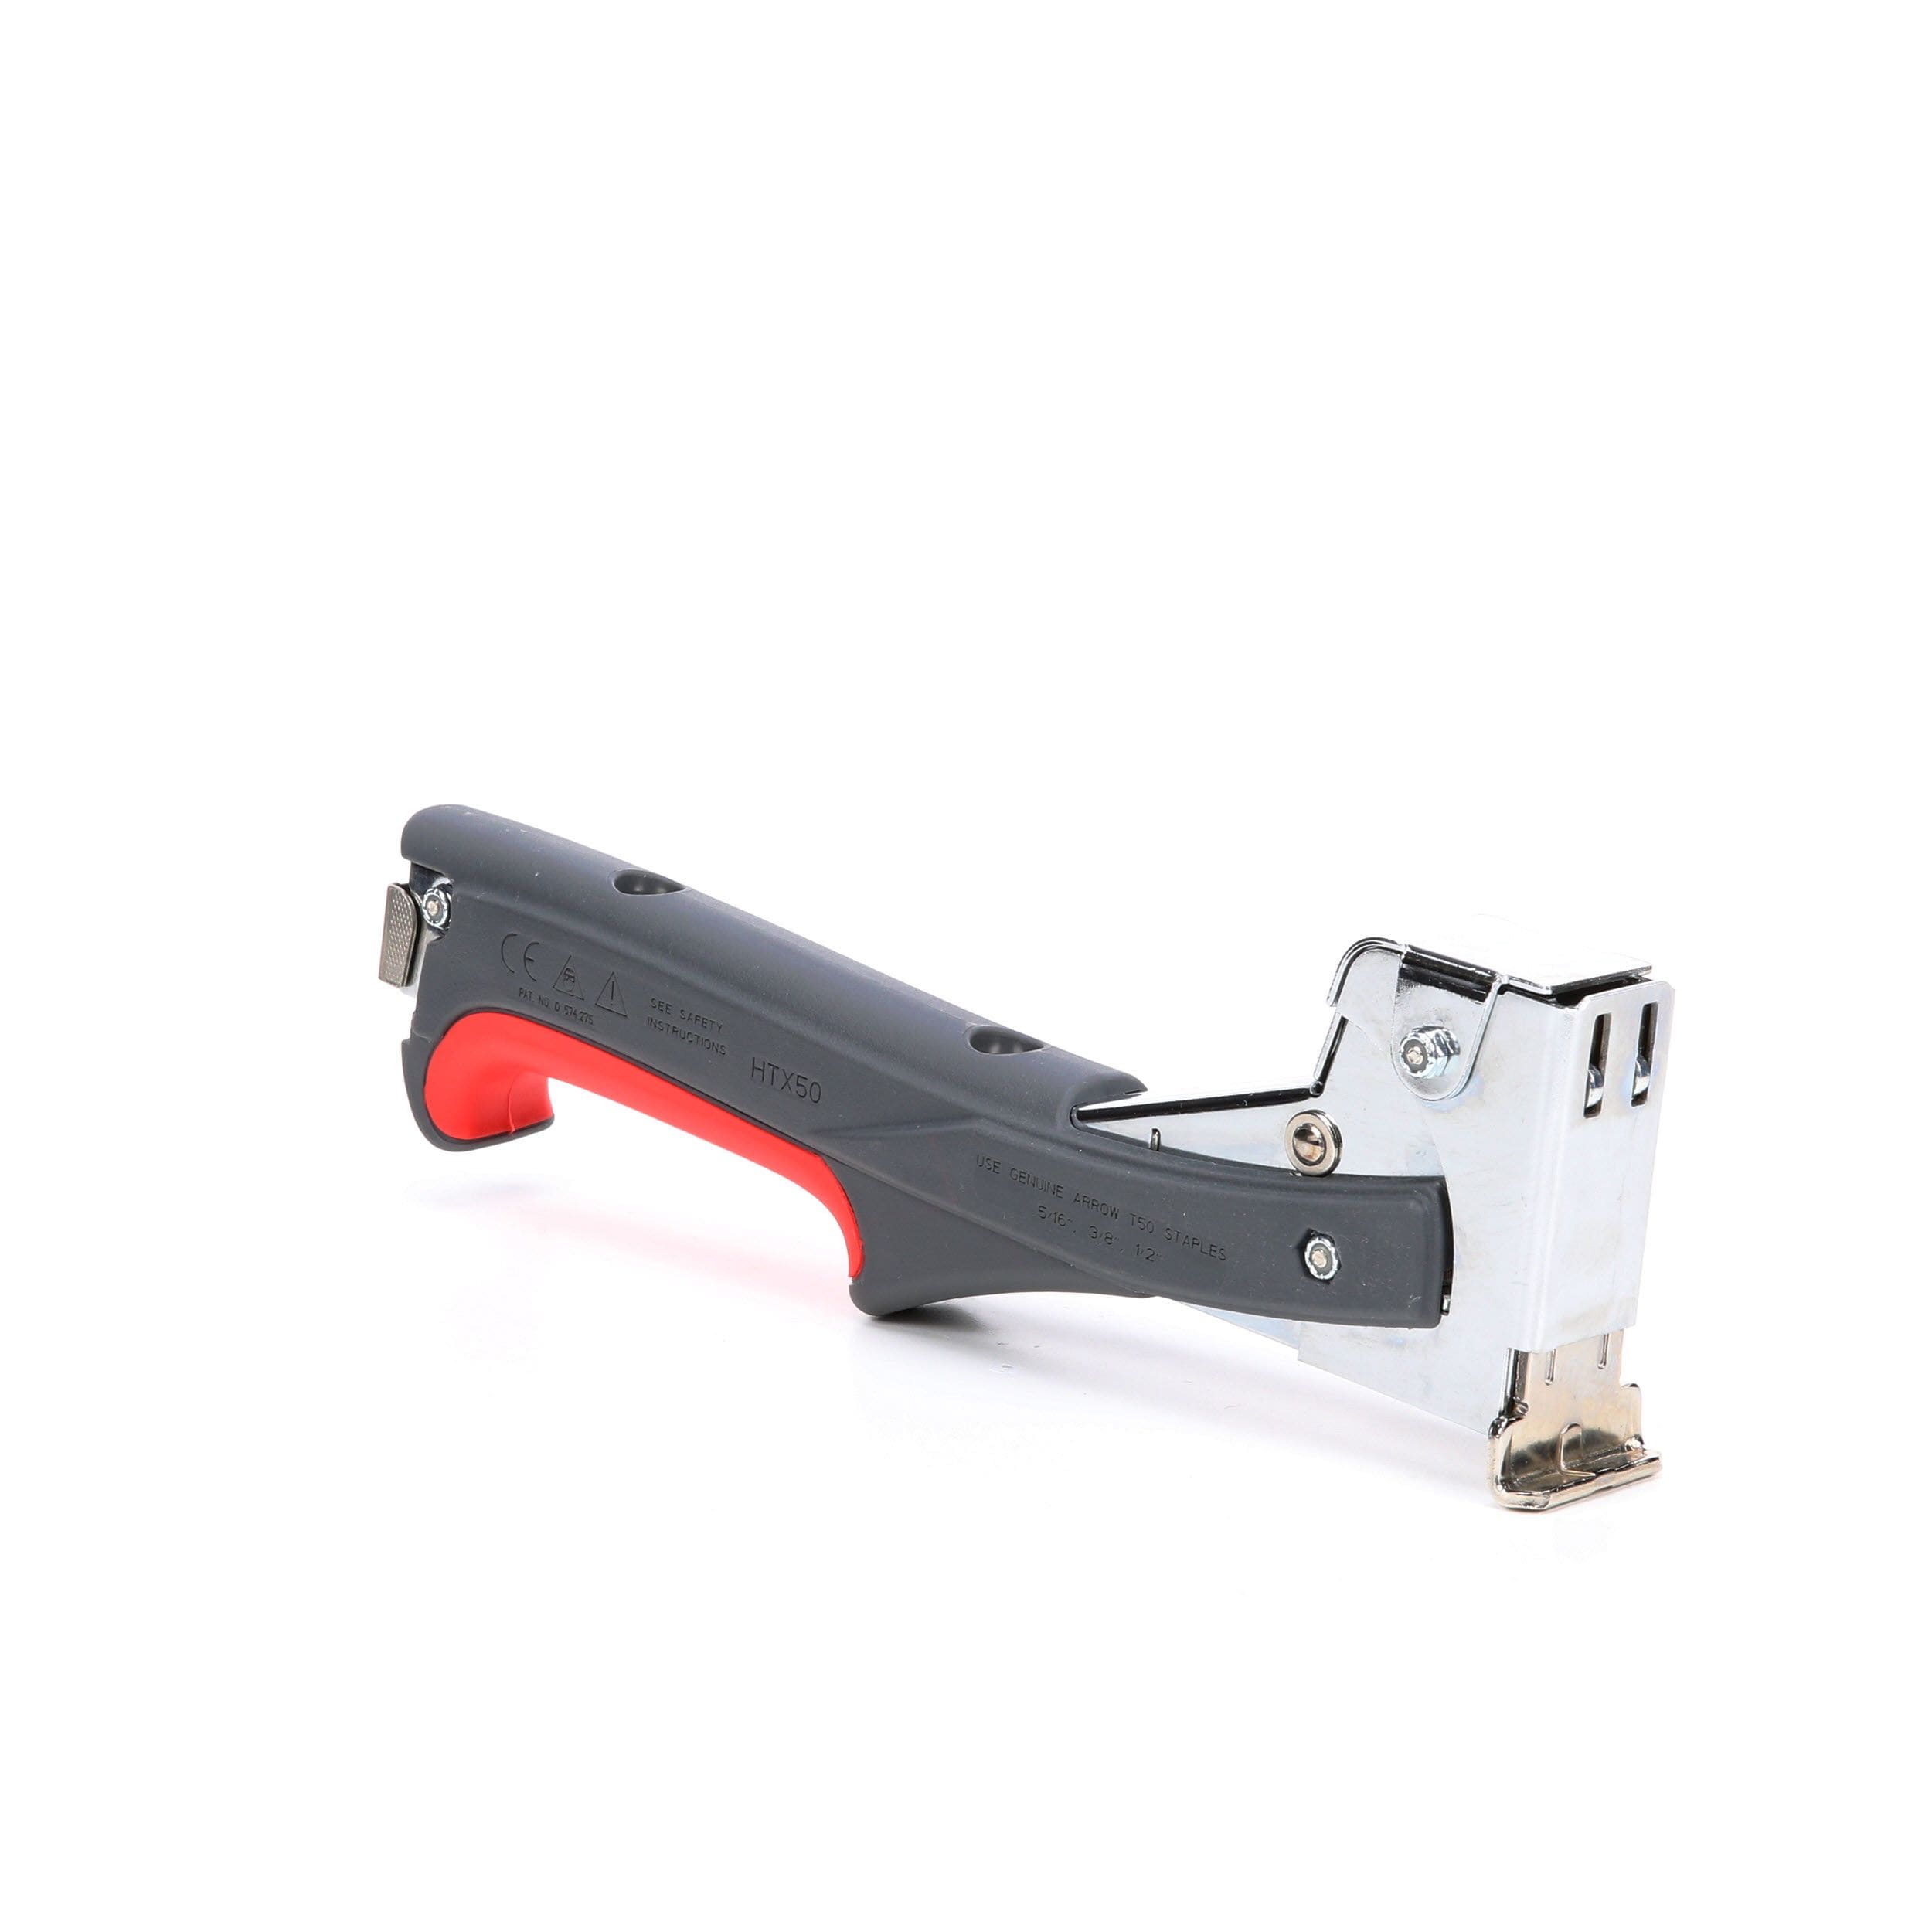 Hammer Tacker With Soft Grip Arrow T50 Staples Heavy Duty Stapling Tools